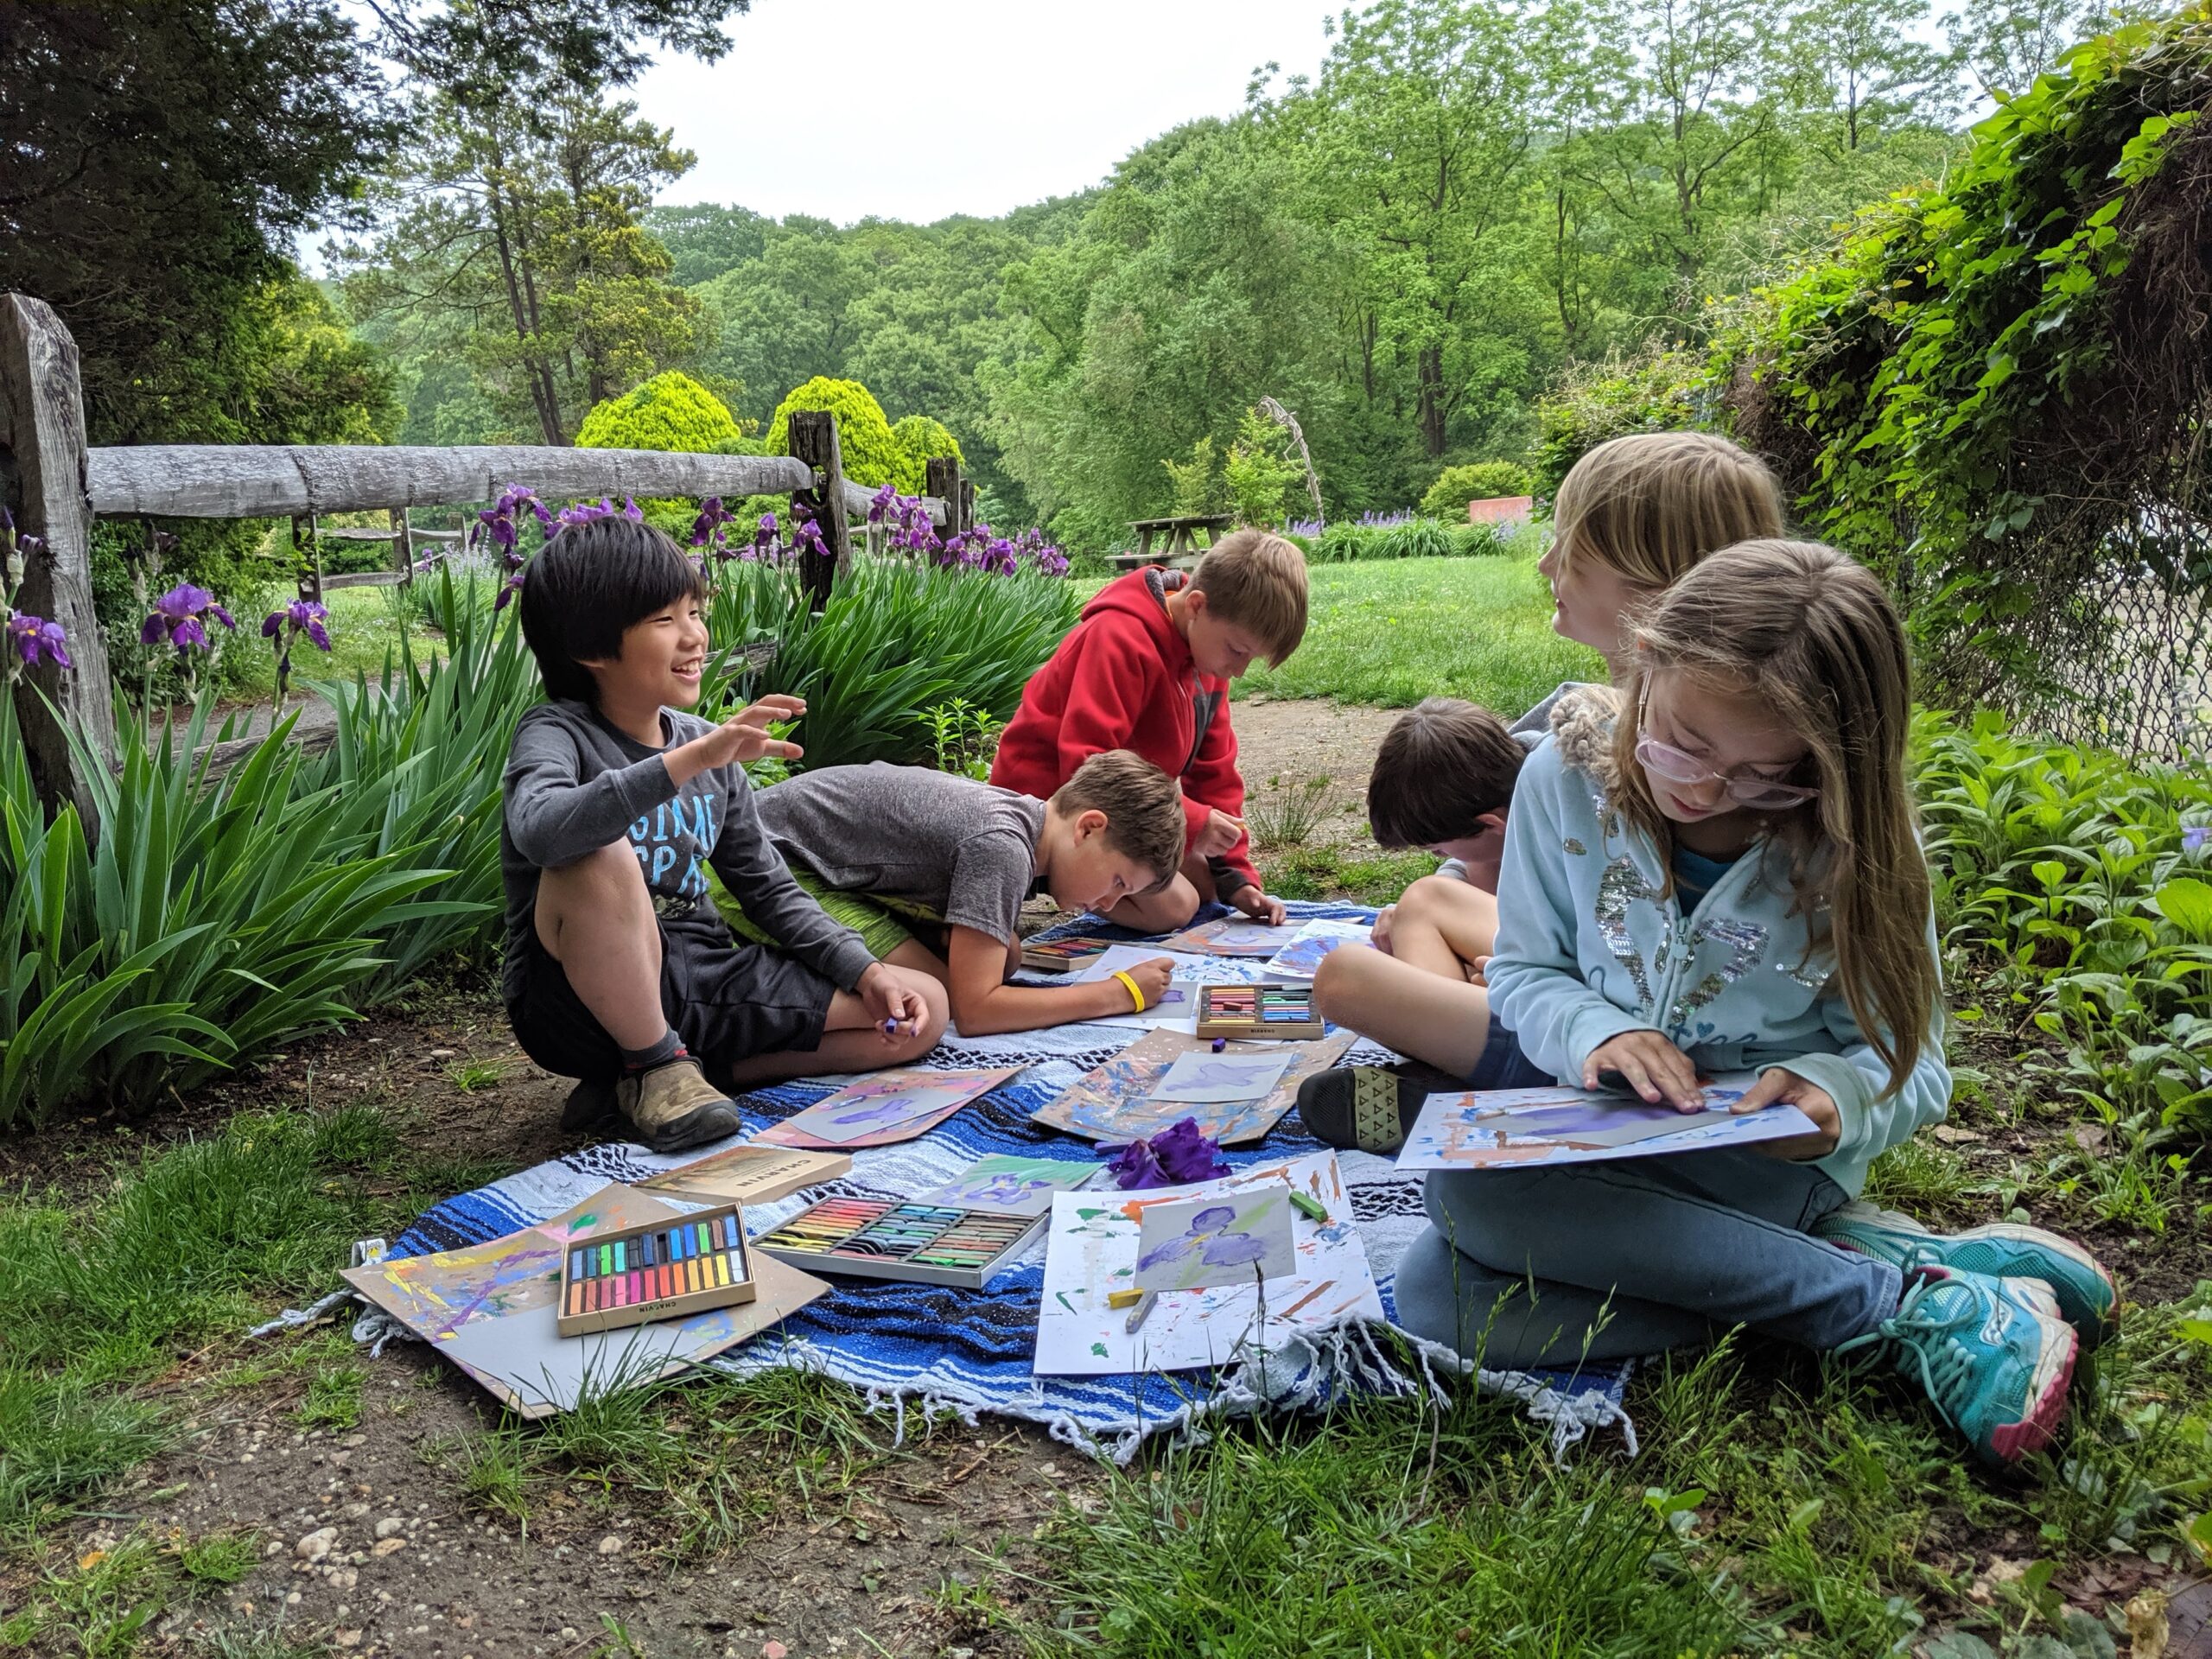 Children Outdoors drawing art in a field